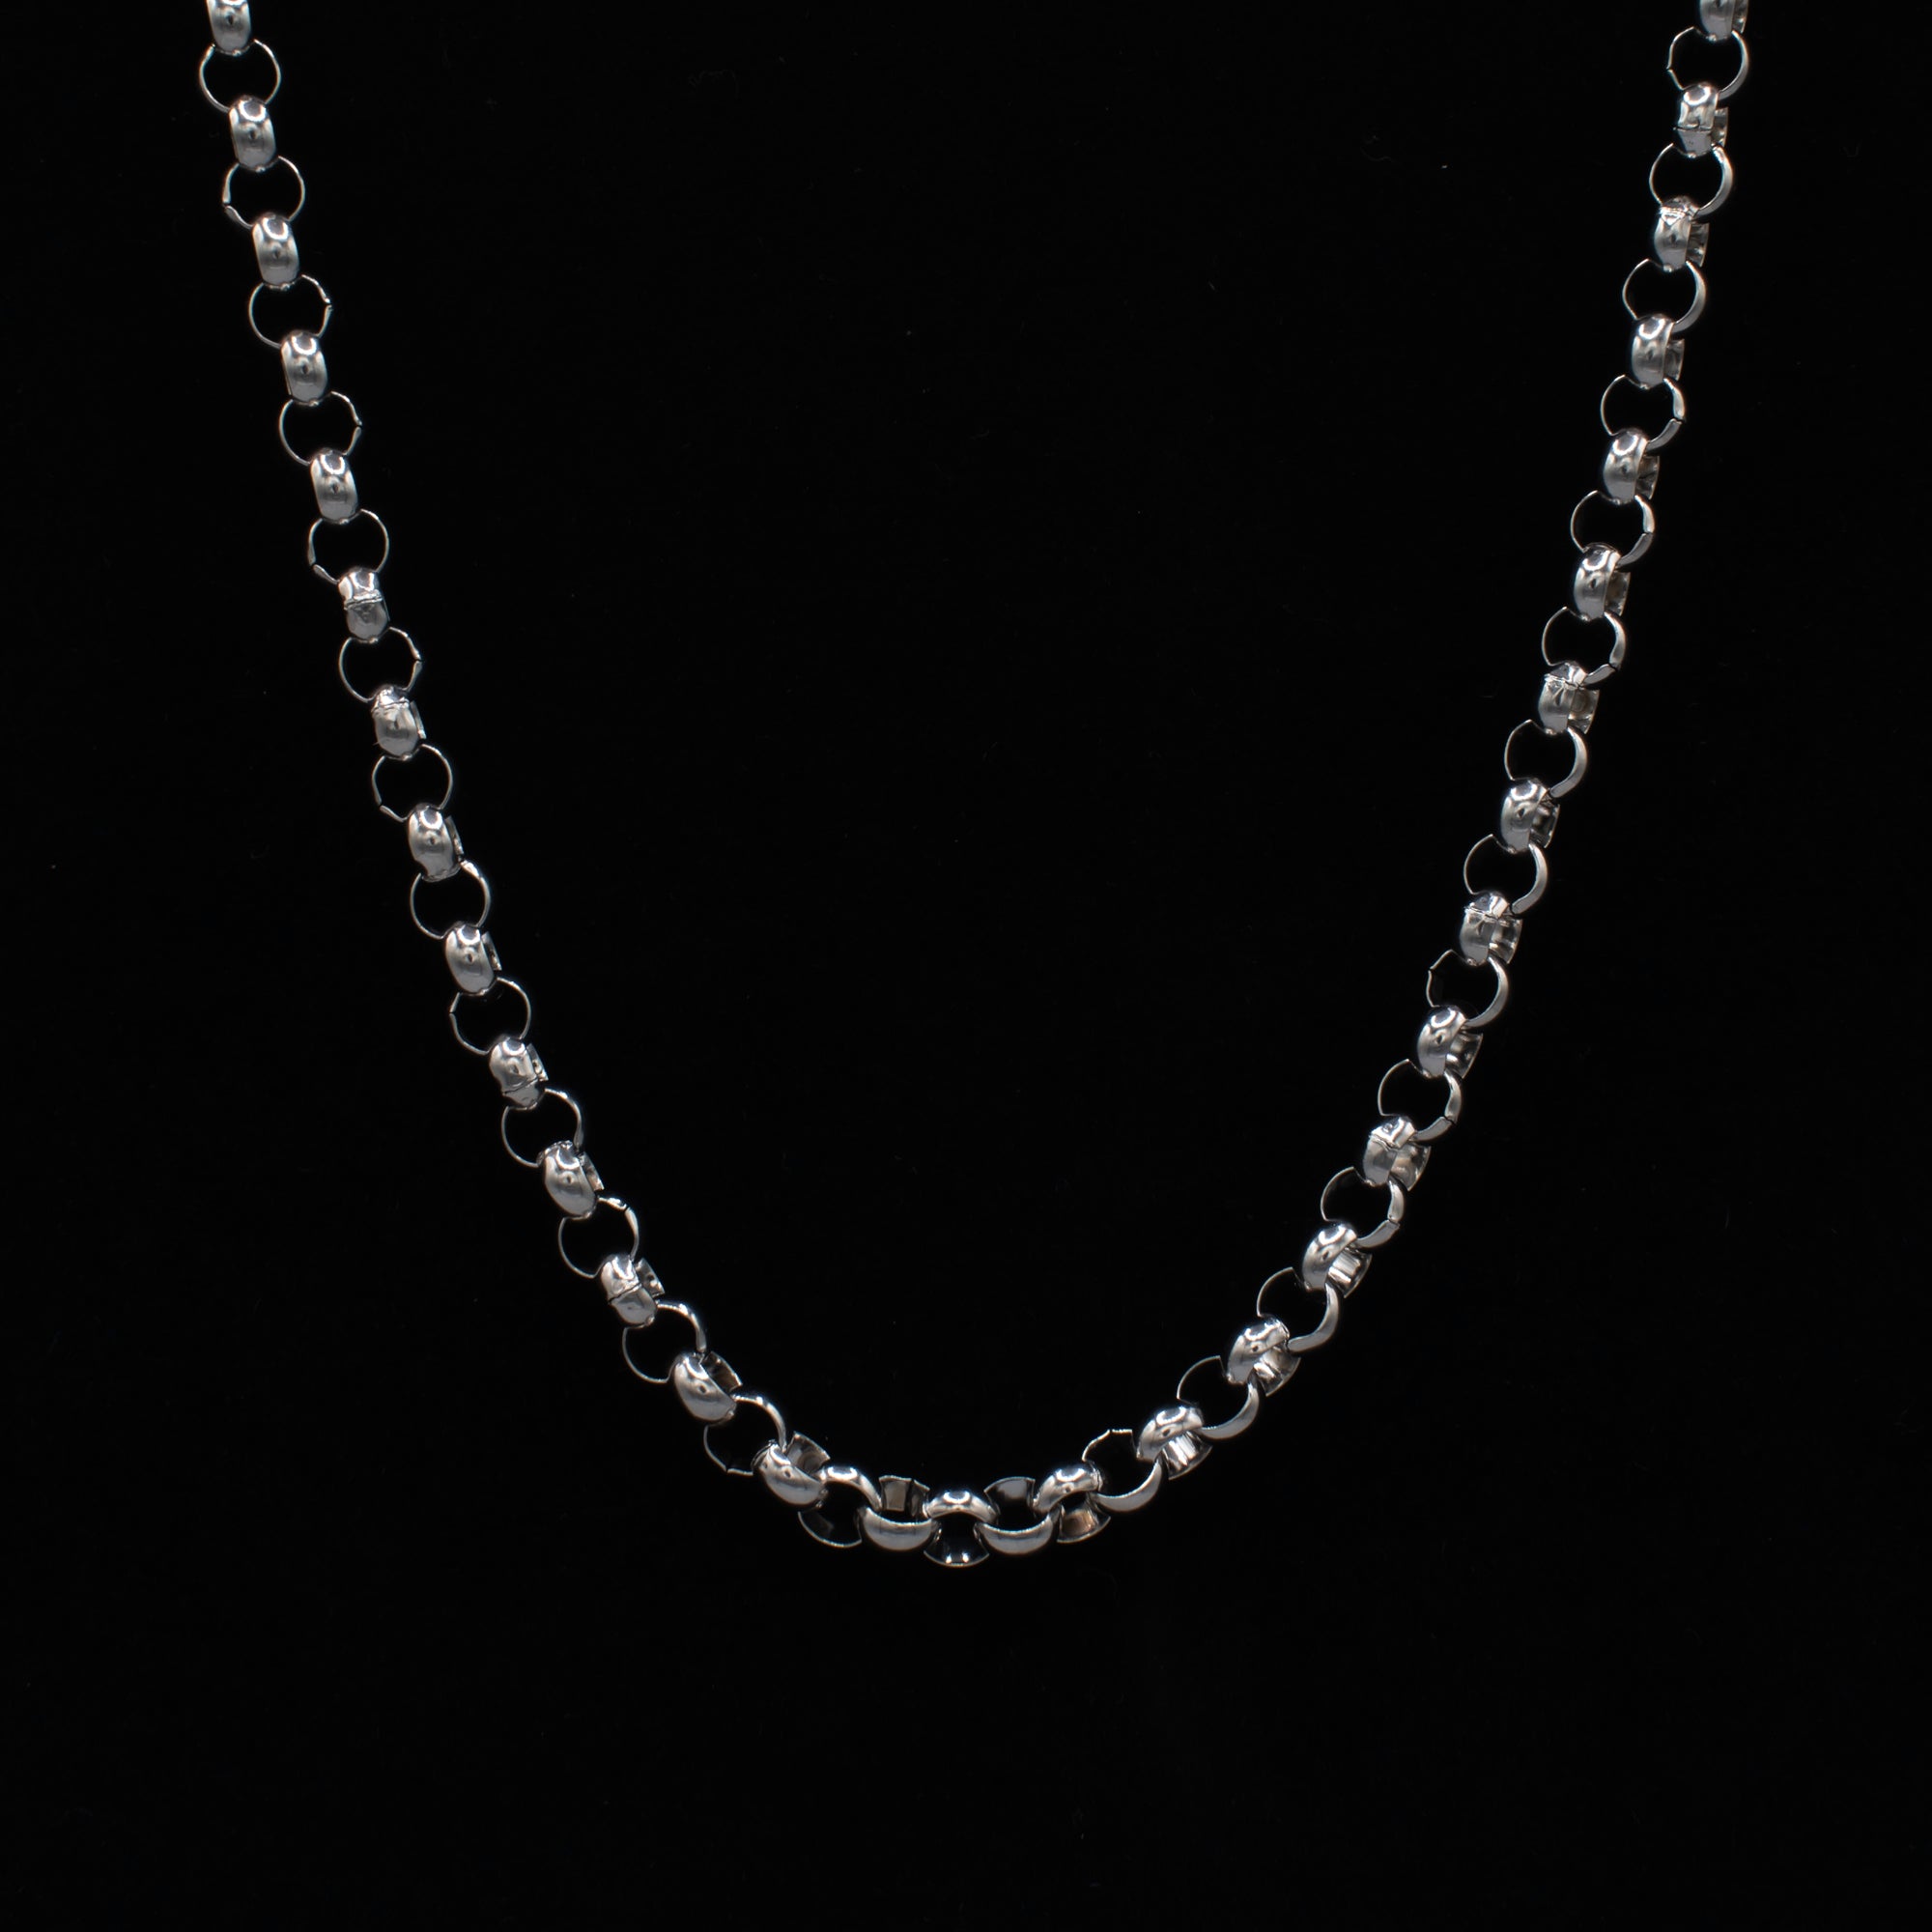 Belcher Necklace - (Silver) 7mm